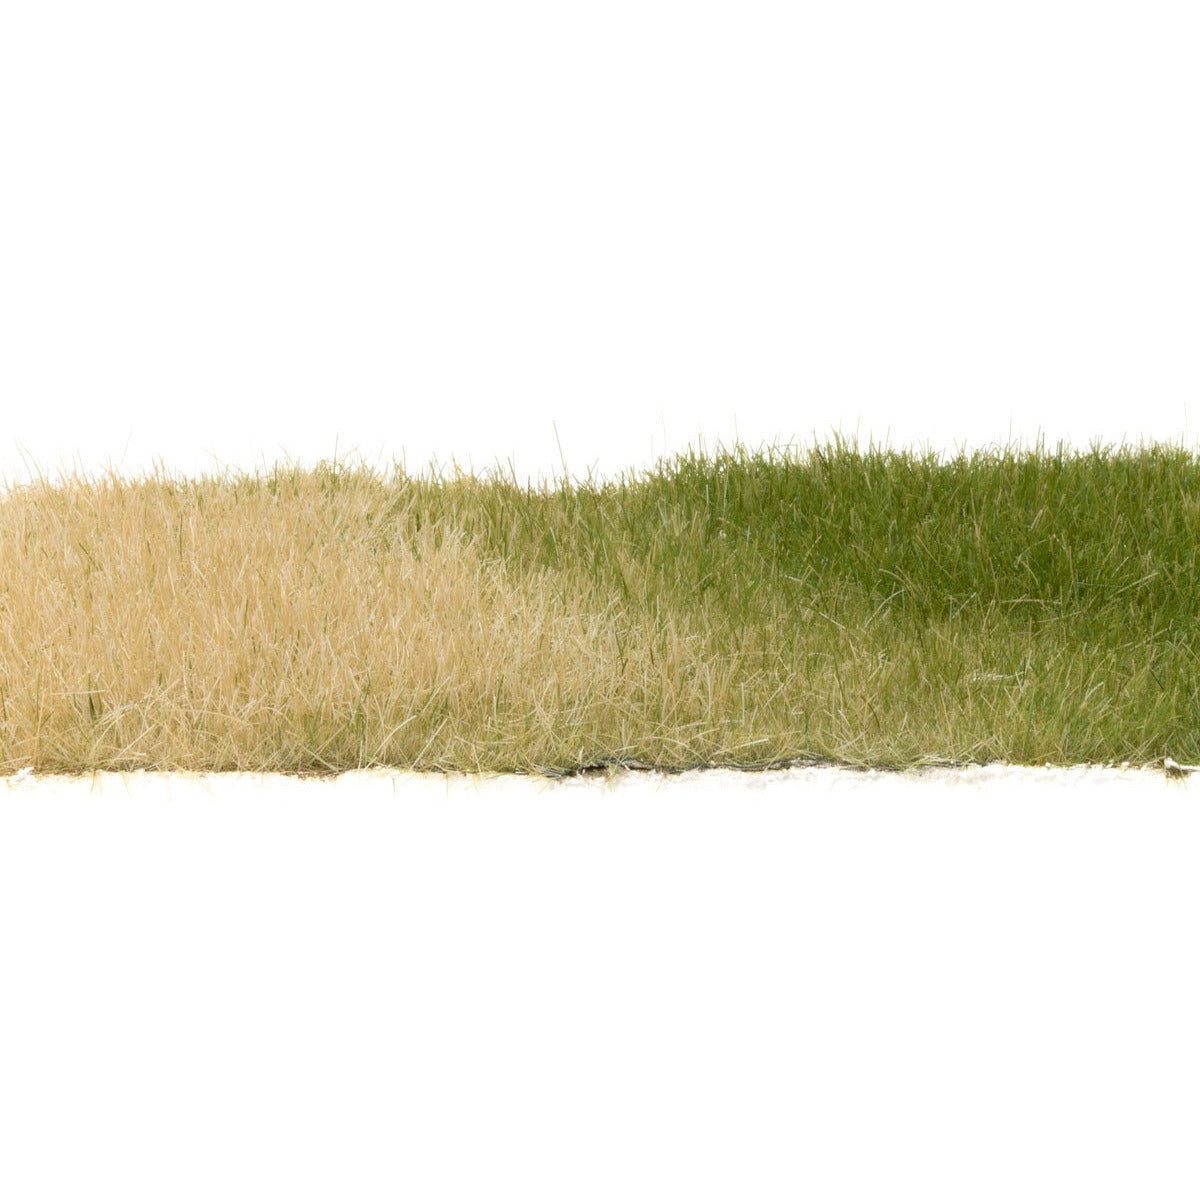 WOODLAND SCENICS Static Grass Medium Green 4mm